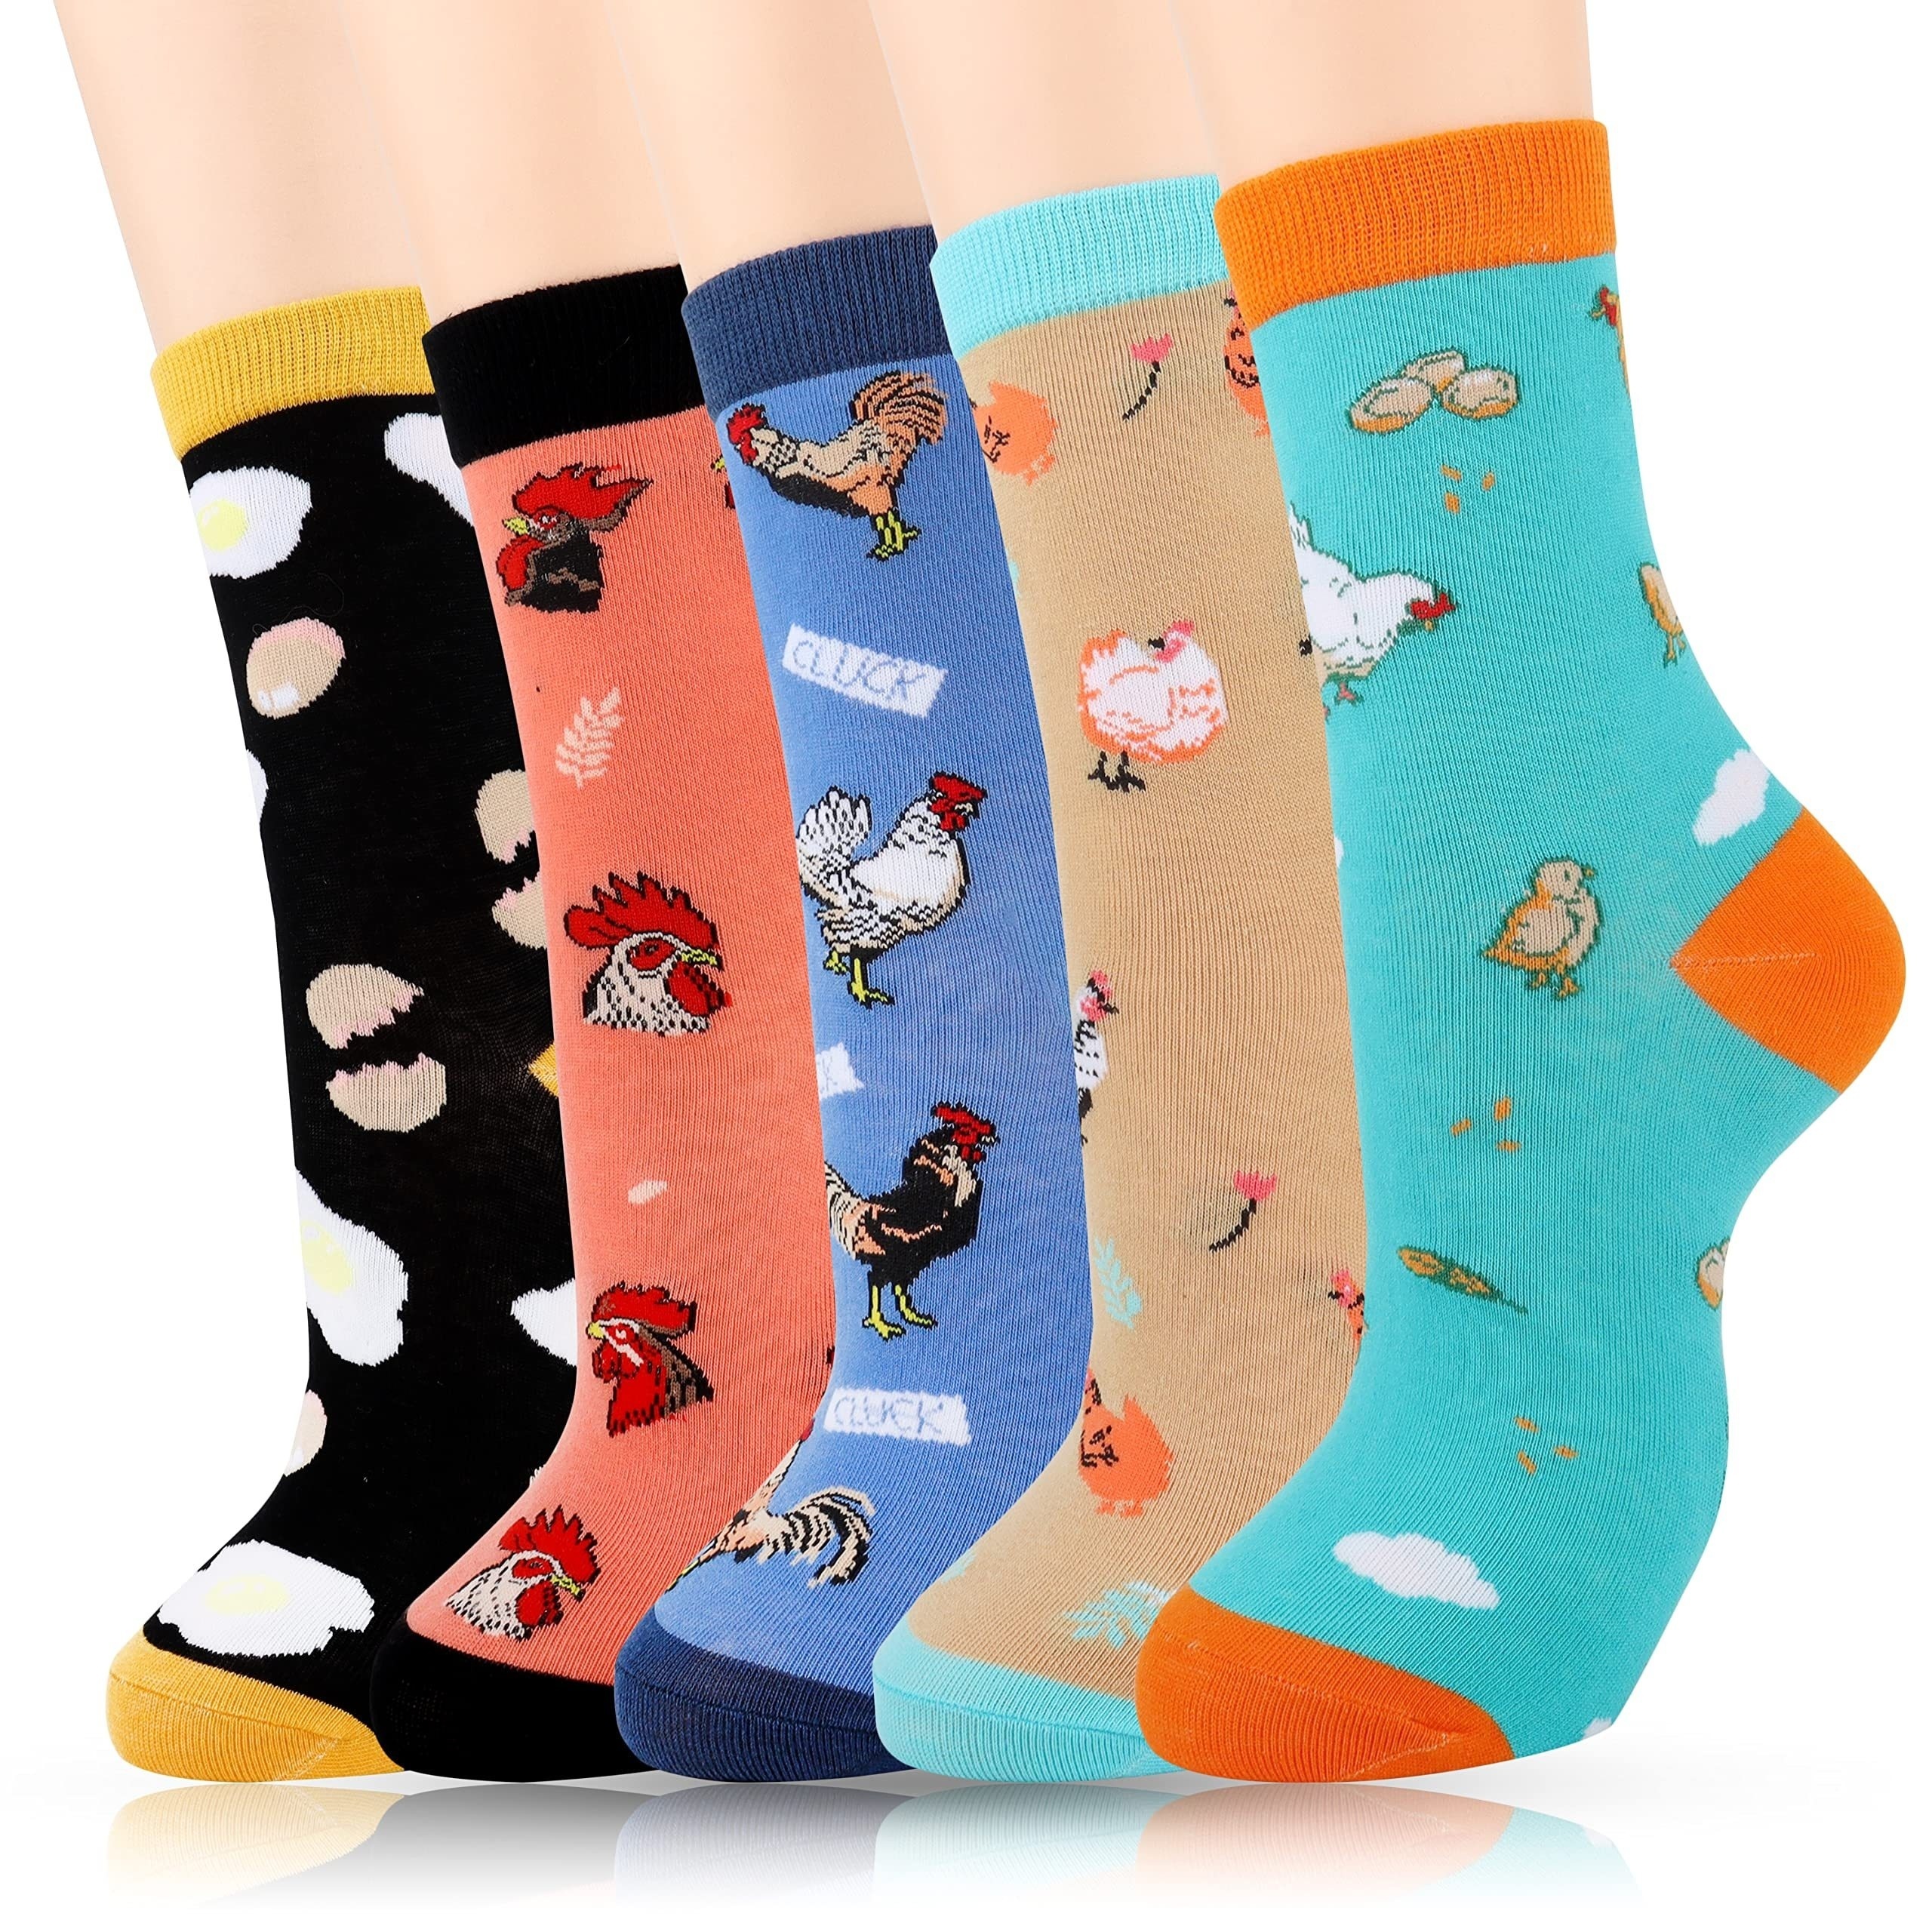 Crazy Socks Gymnastics Fun Print Novelty Crew Socks for Women